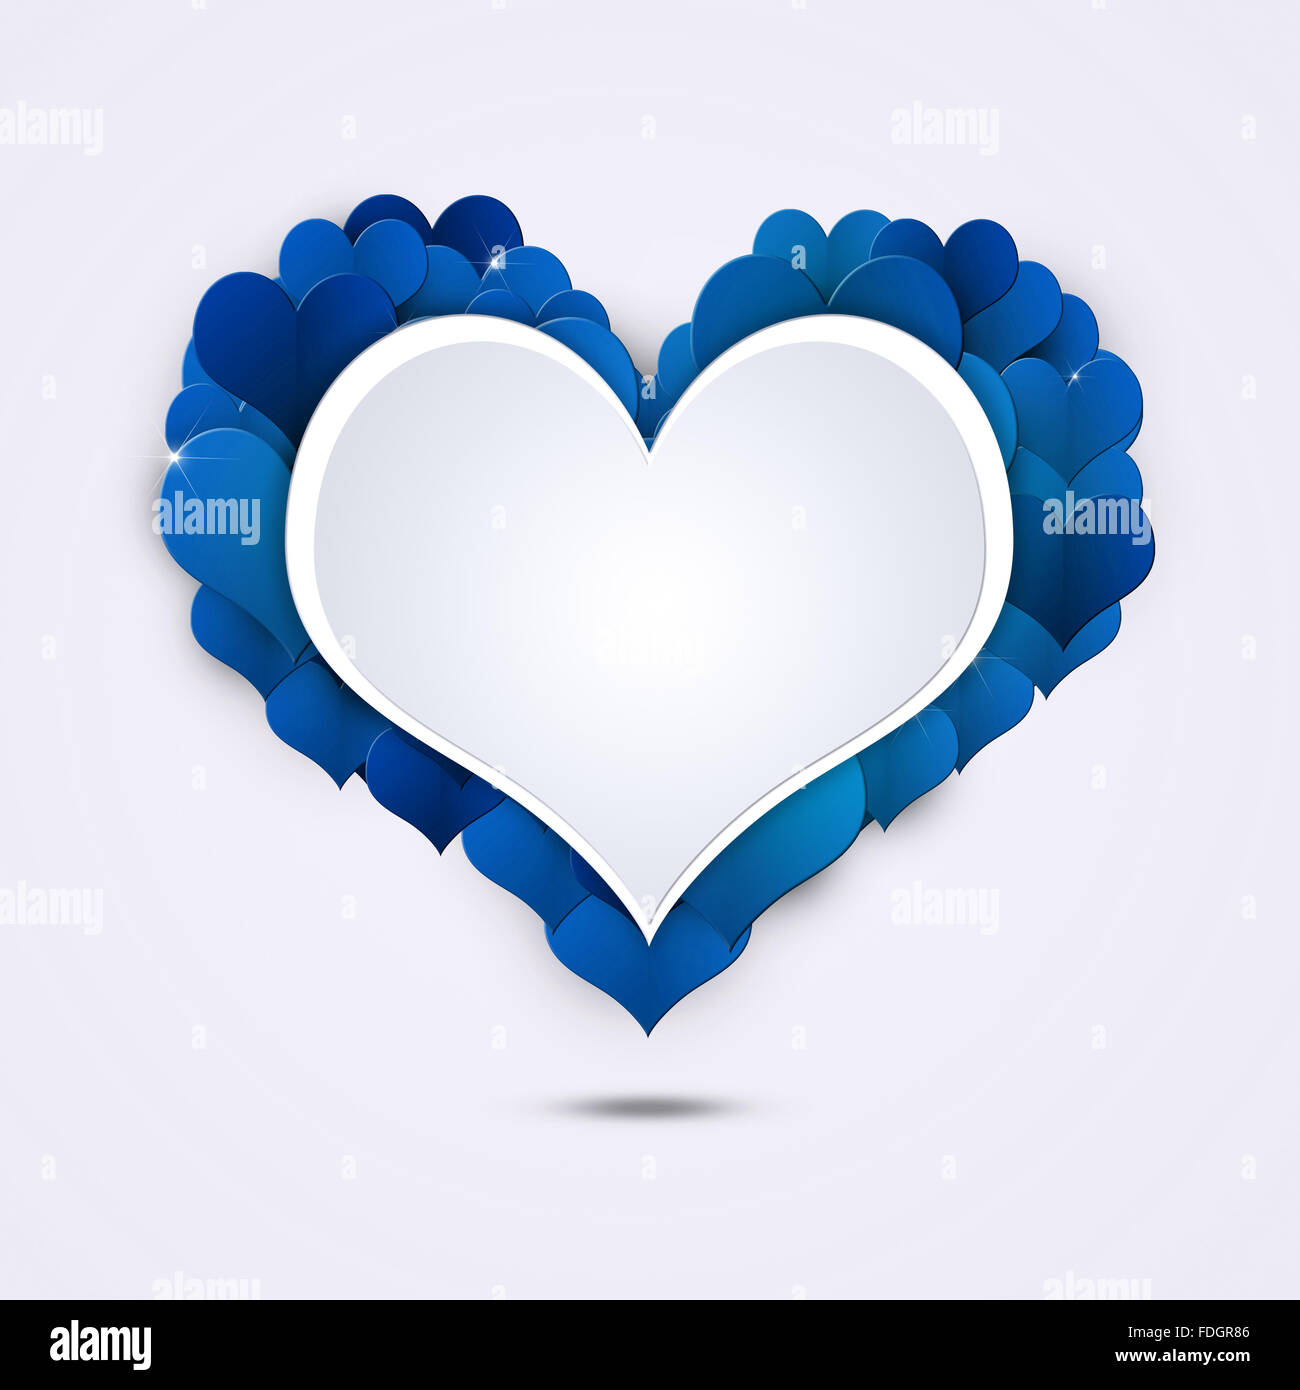 holiday valentine heart shape card with blue hearts Stock Photo